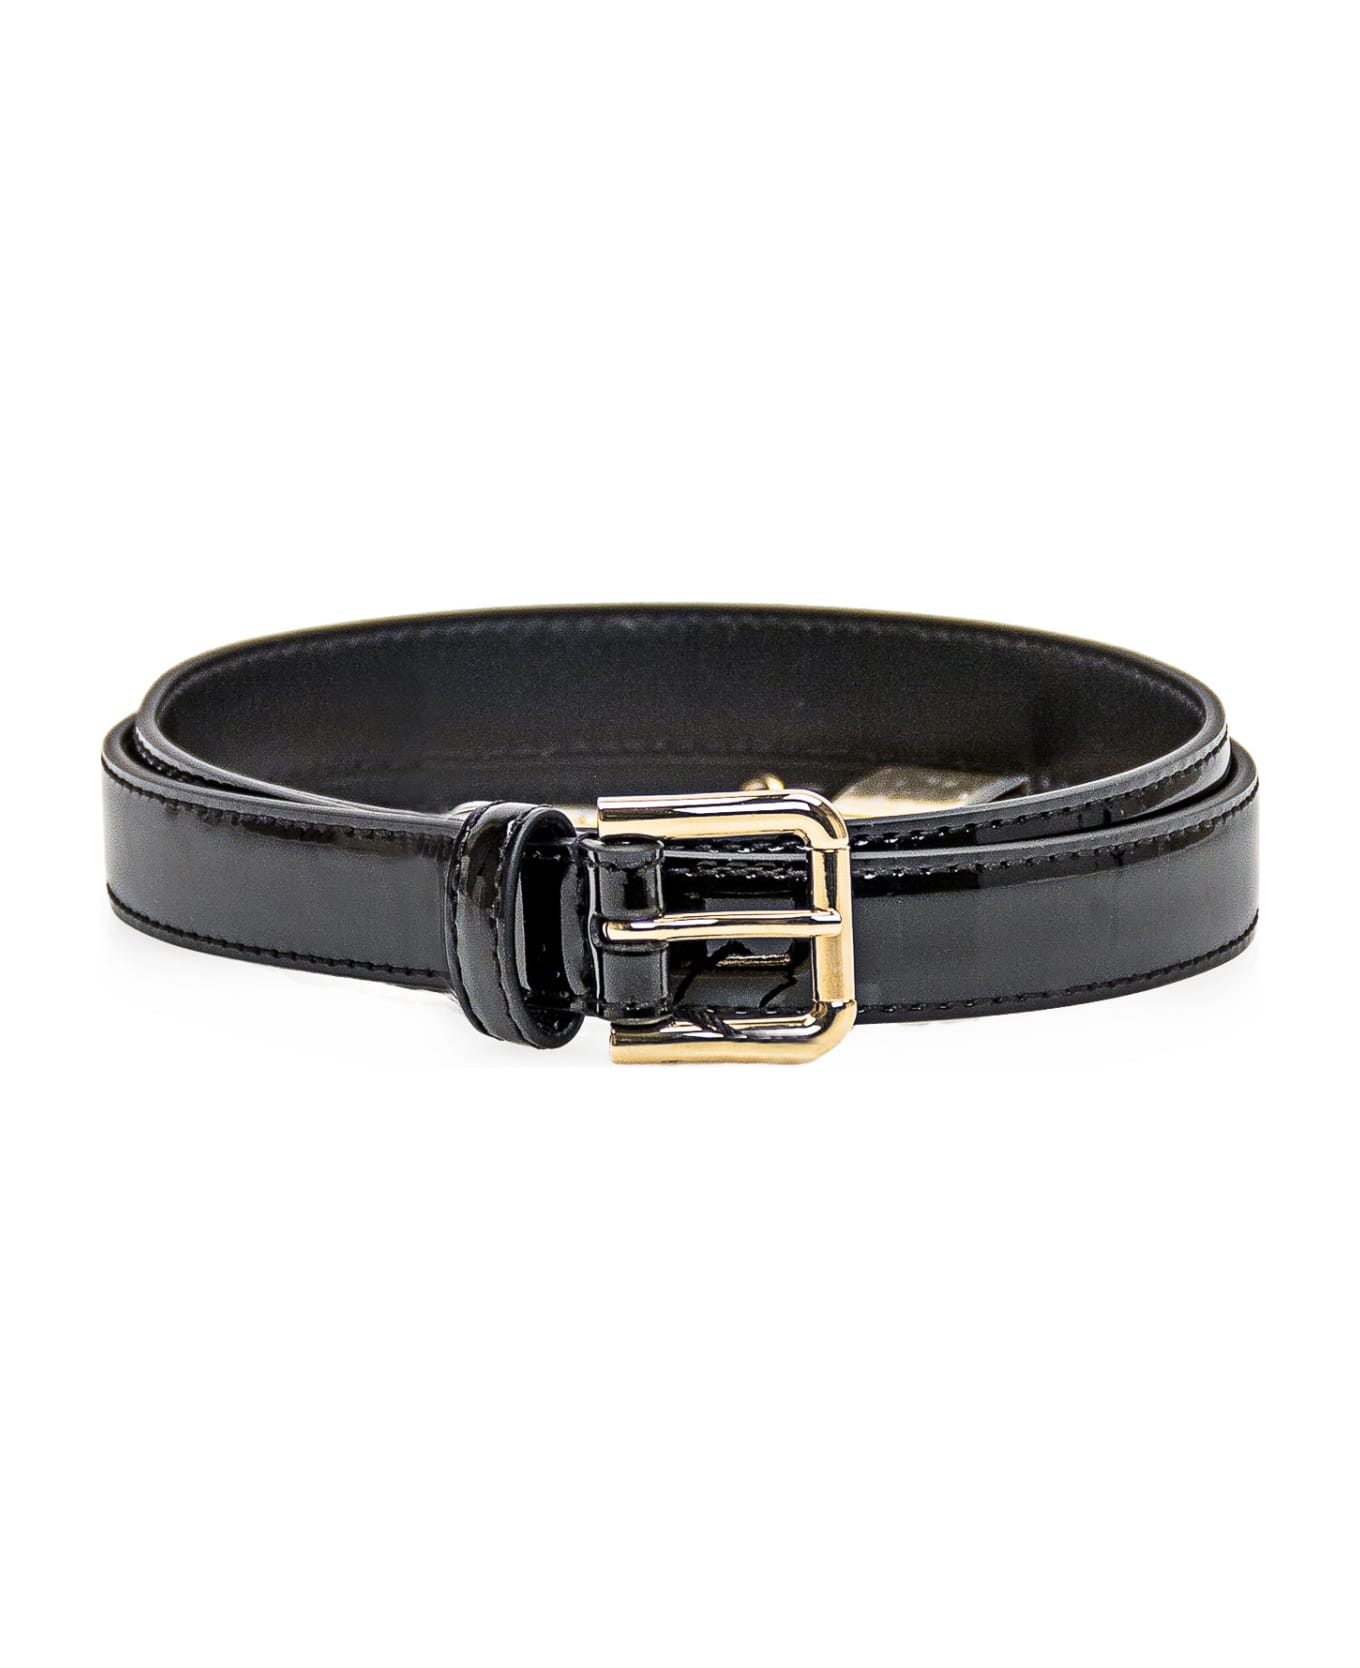 Dolce & Gabbana Black Leather Belt - NERO